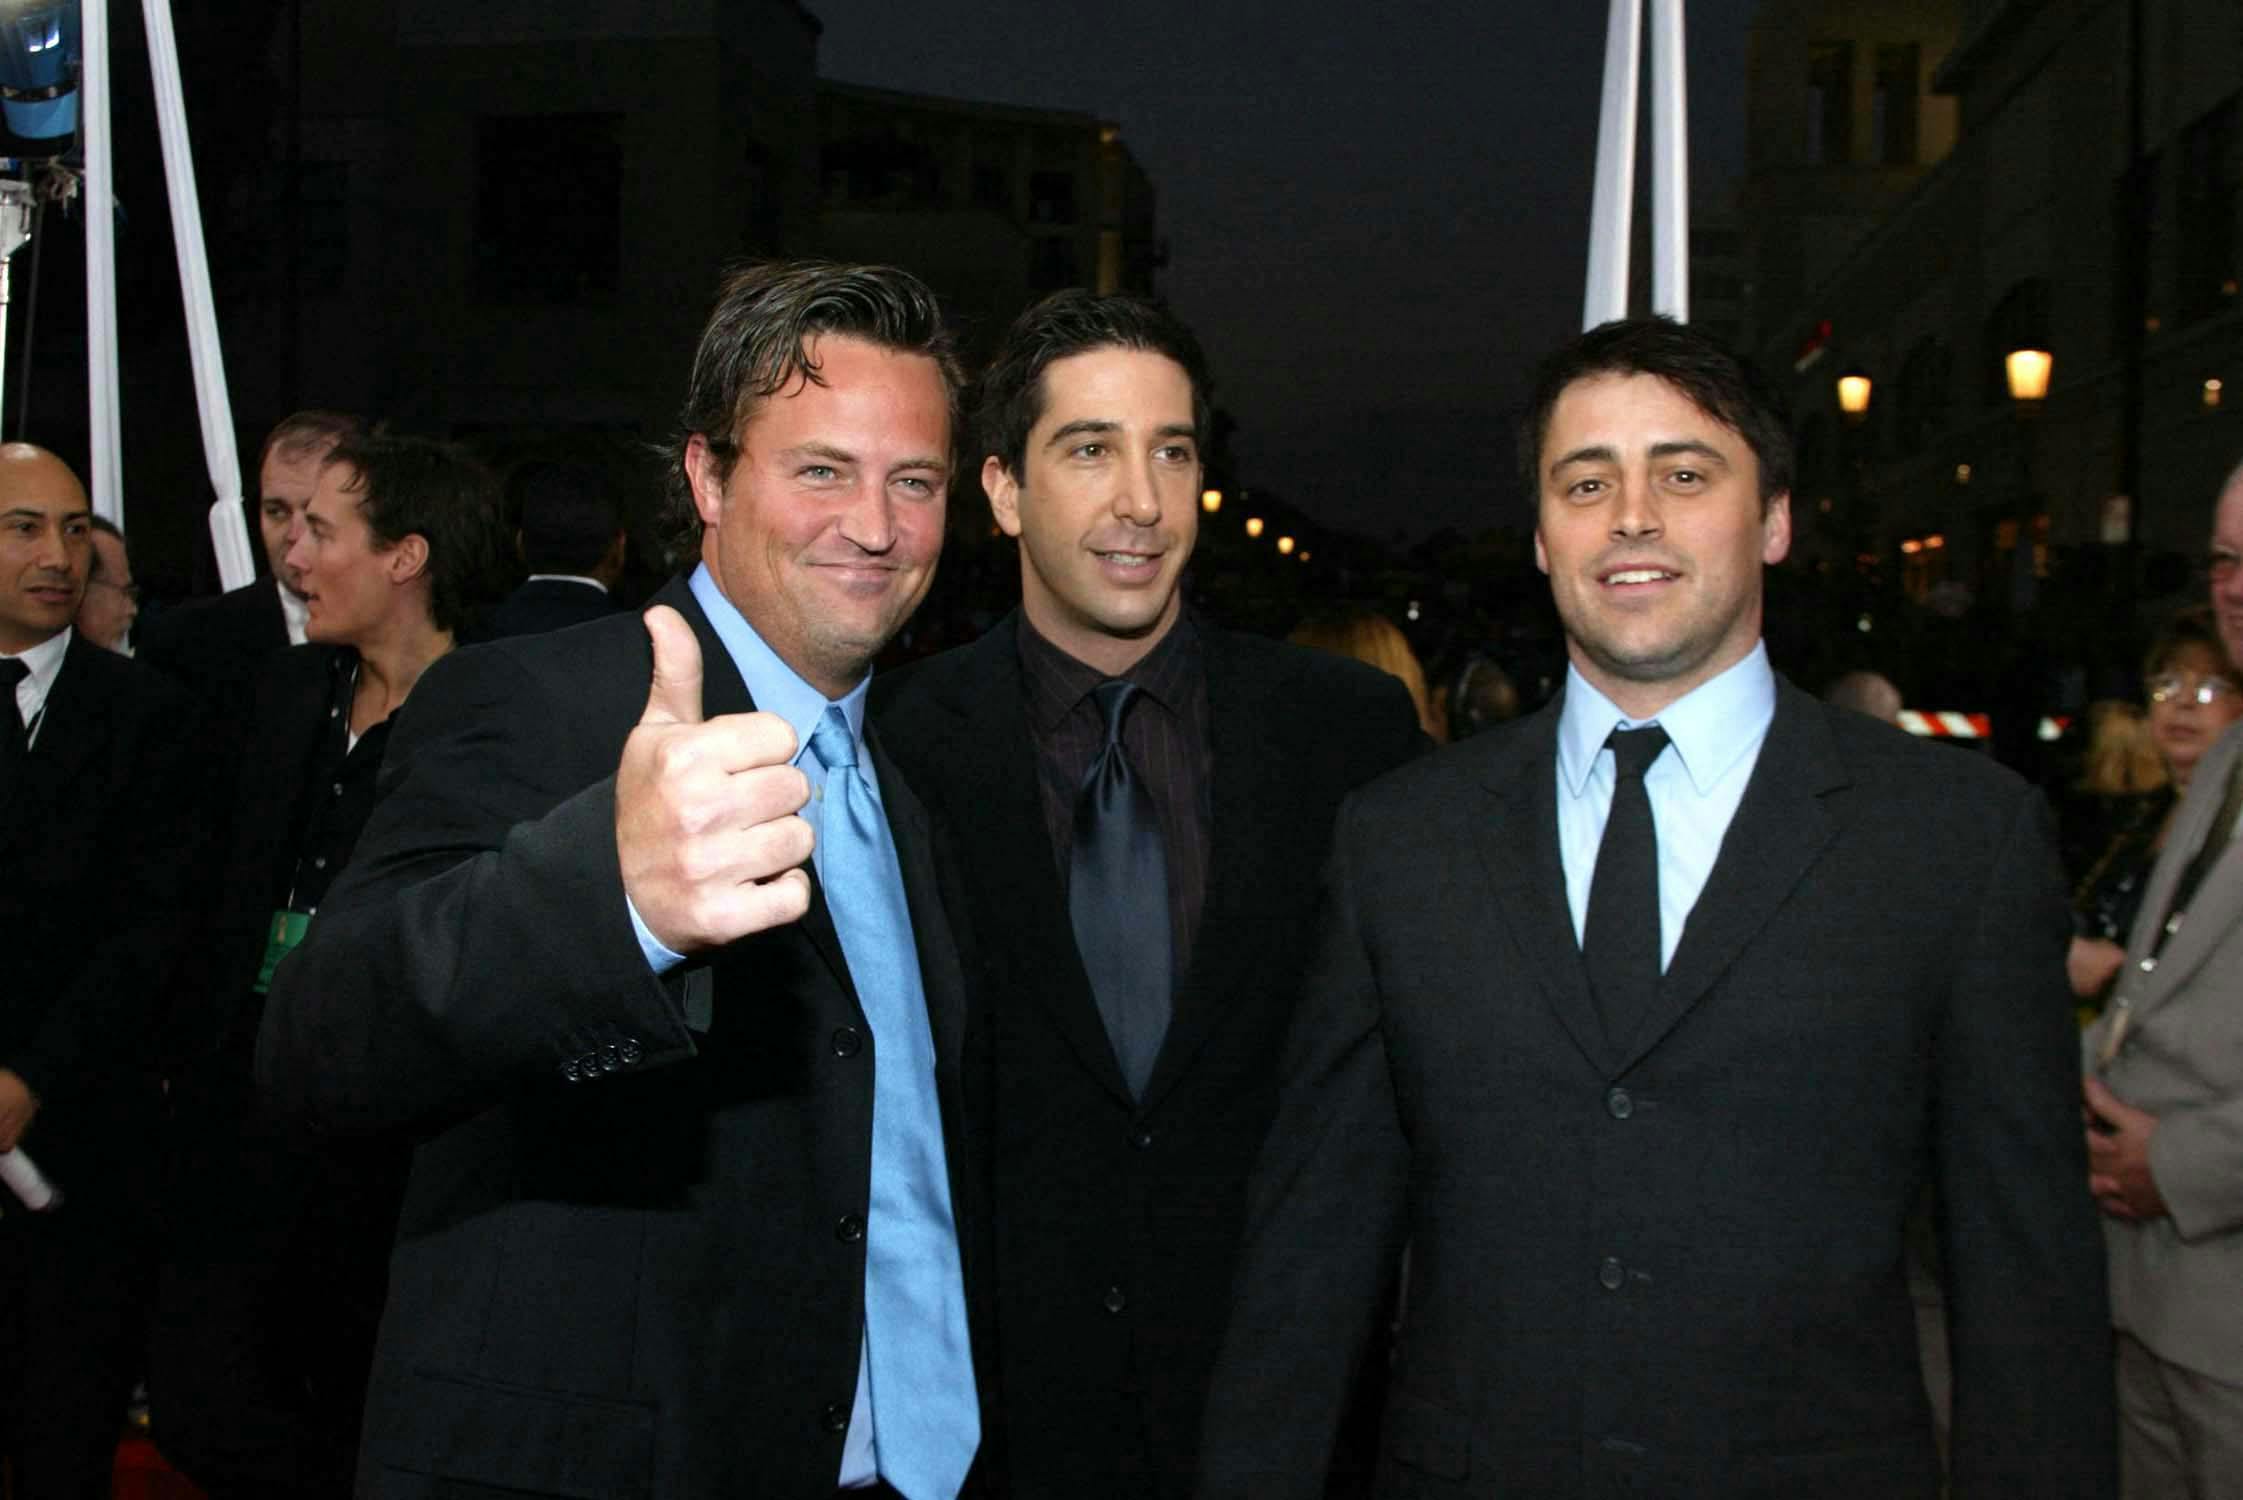 Fyrene samlet til People's Choice Awards i 2002.